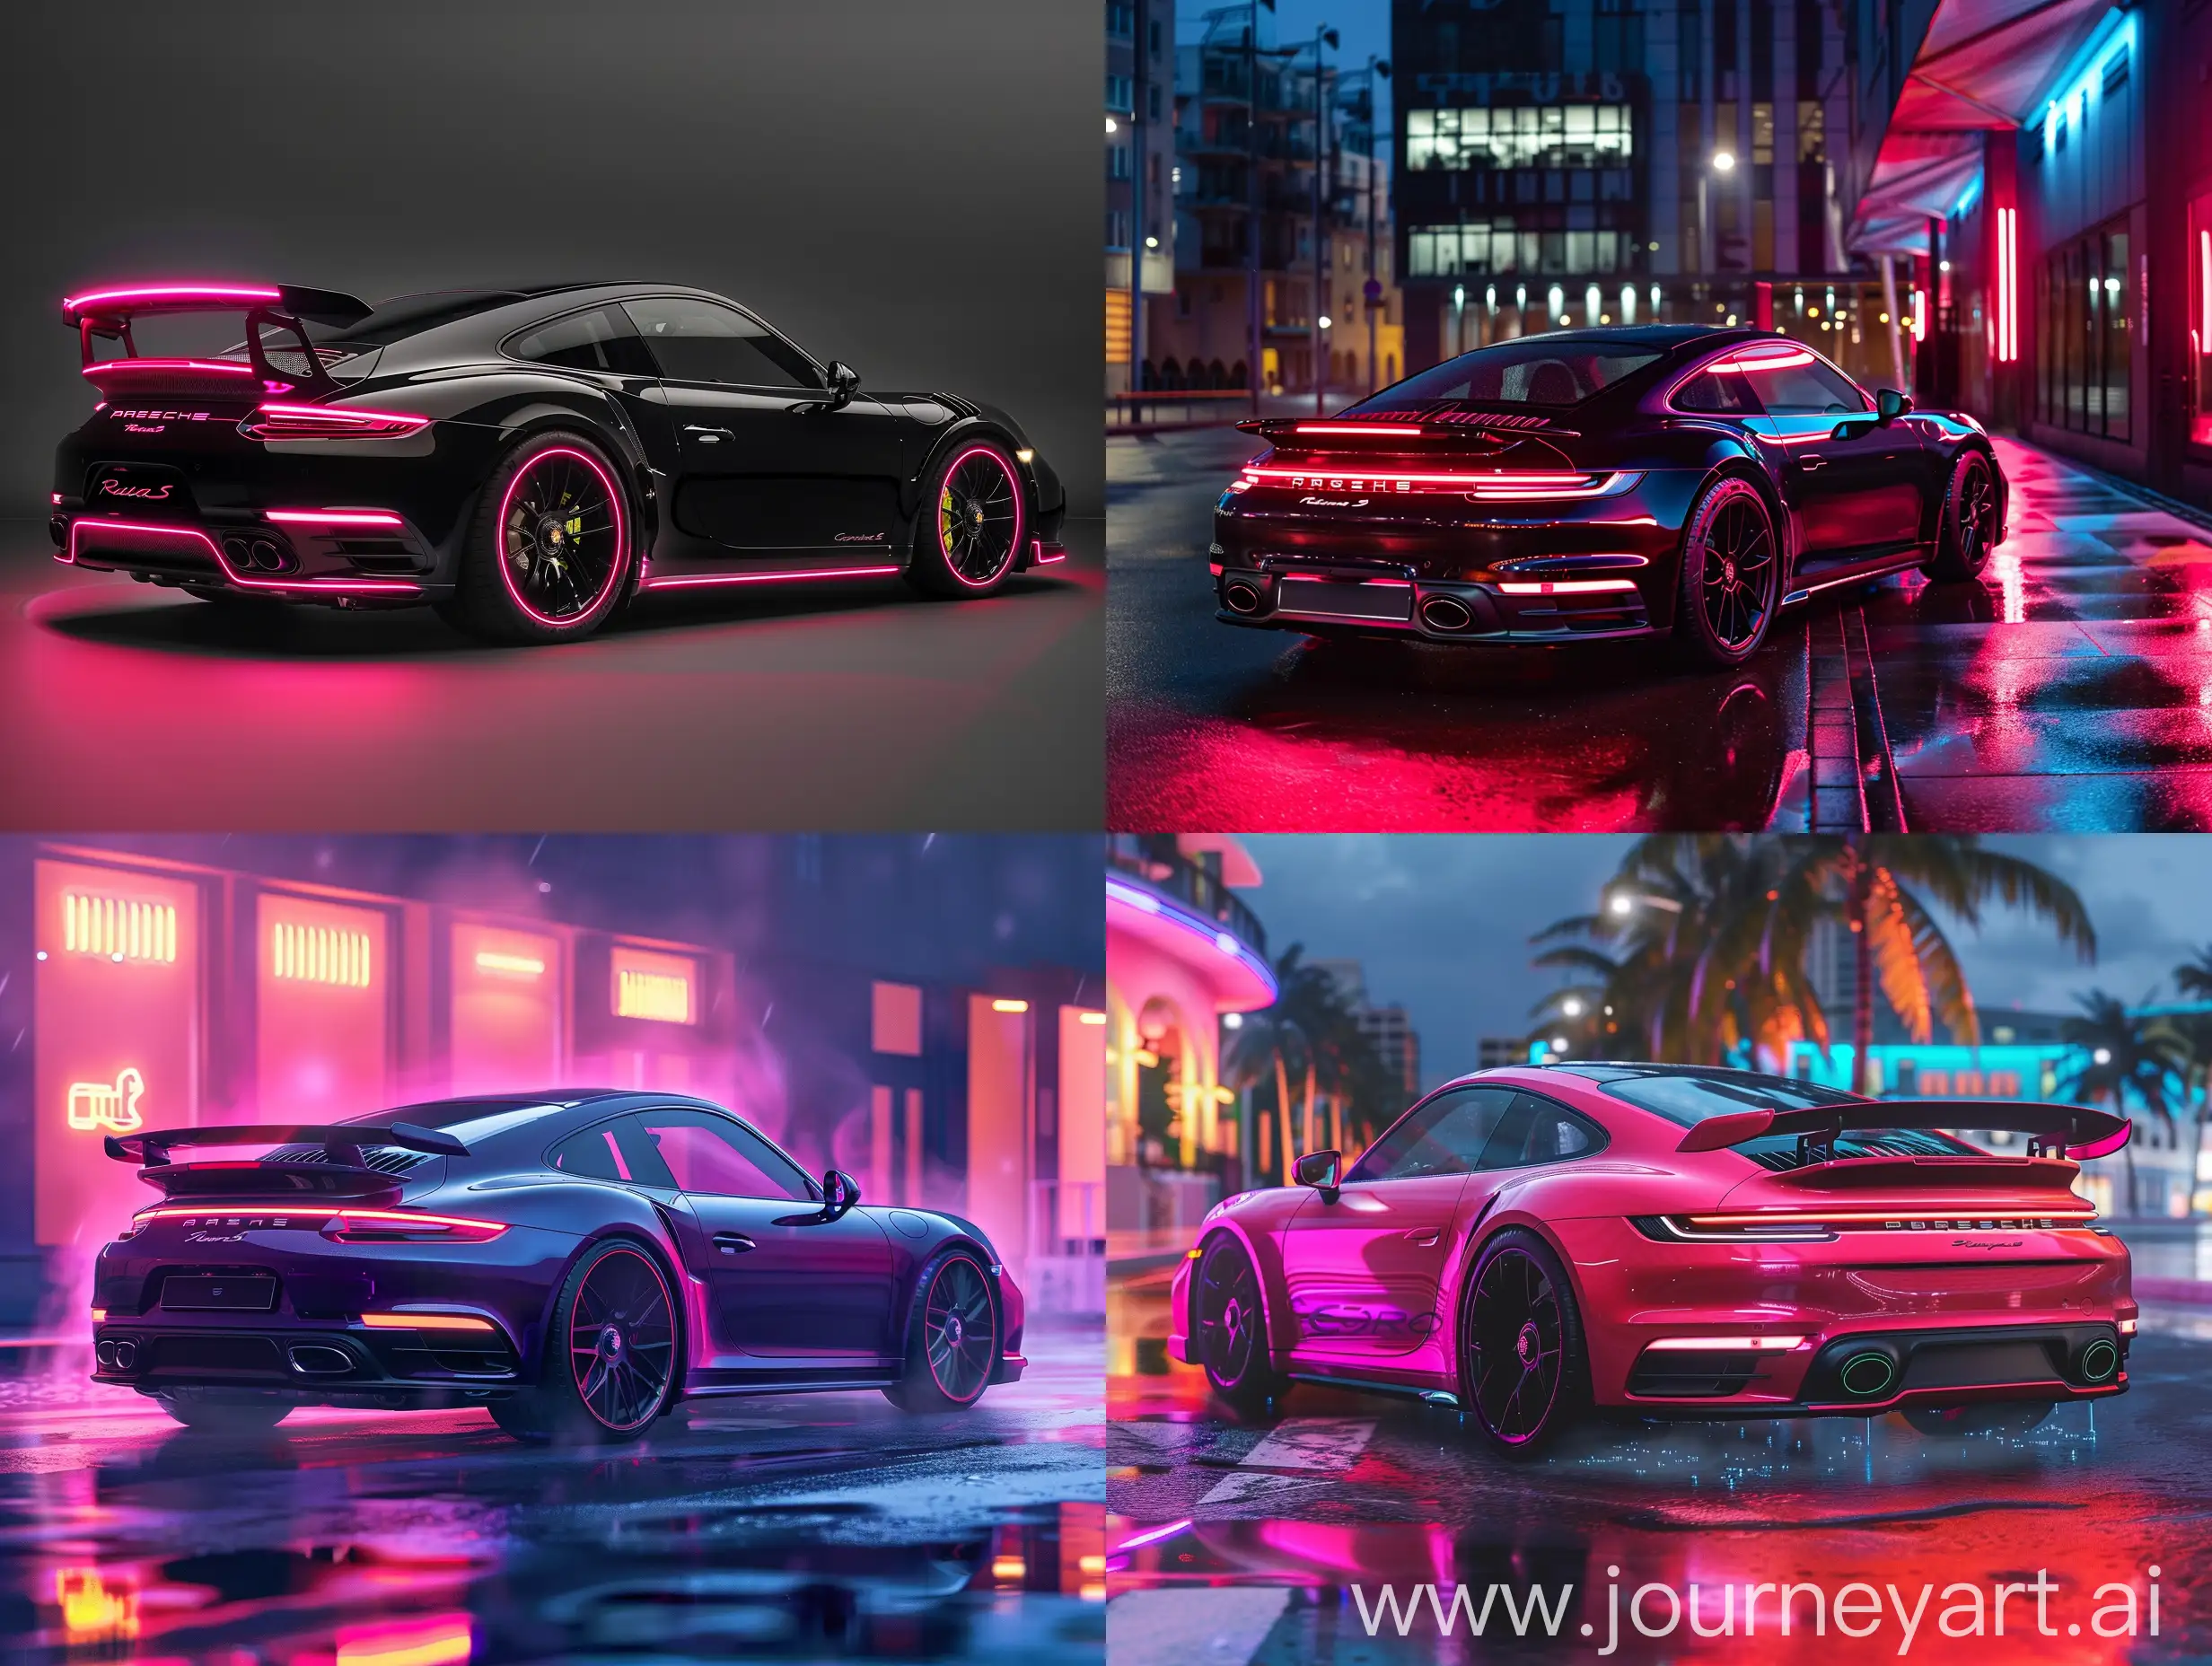 Sleek-Black-Neon-Porsche-911-Turbo-S-Racing-through-Urban-Night